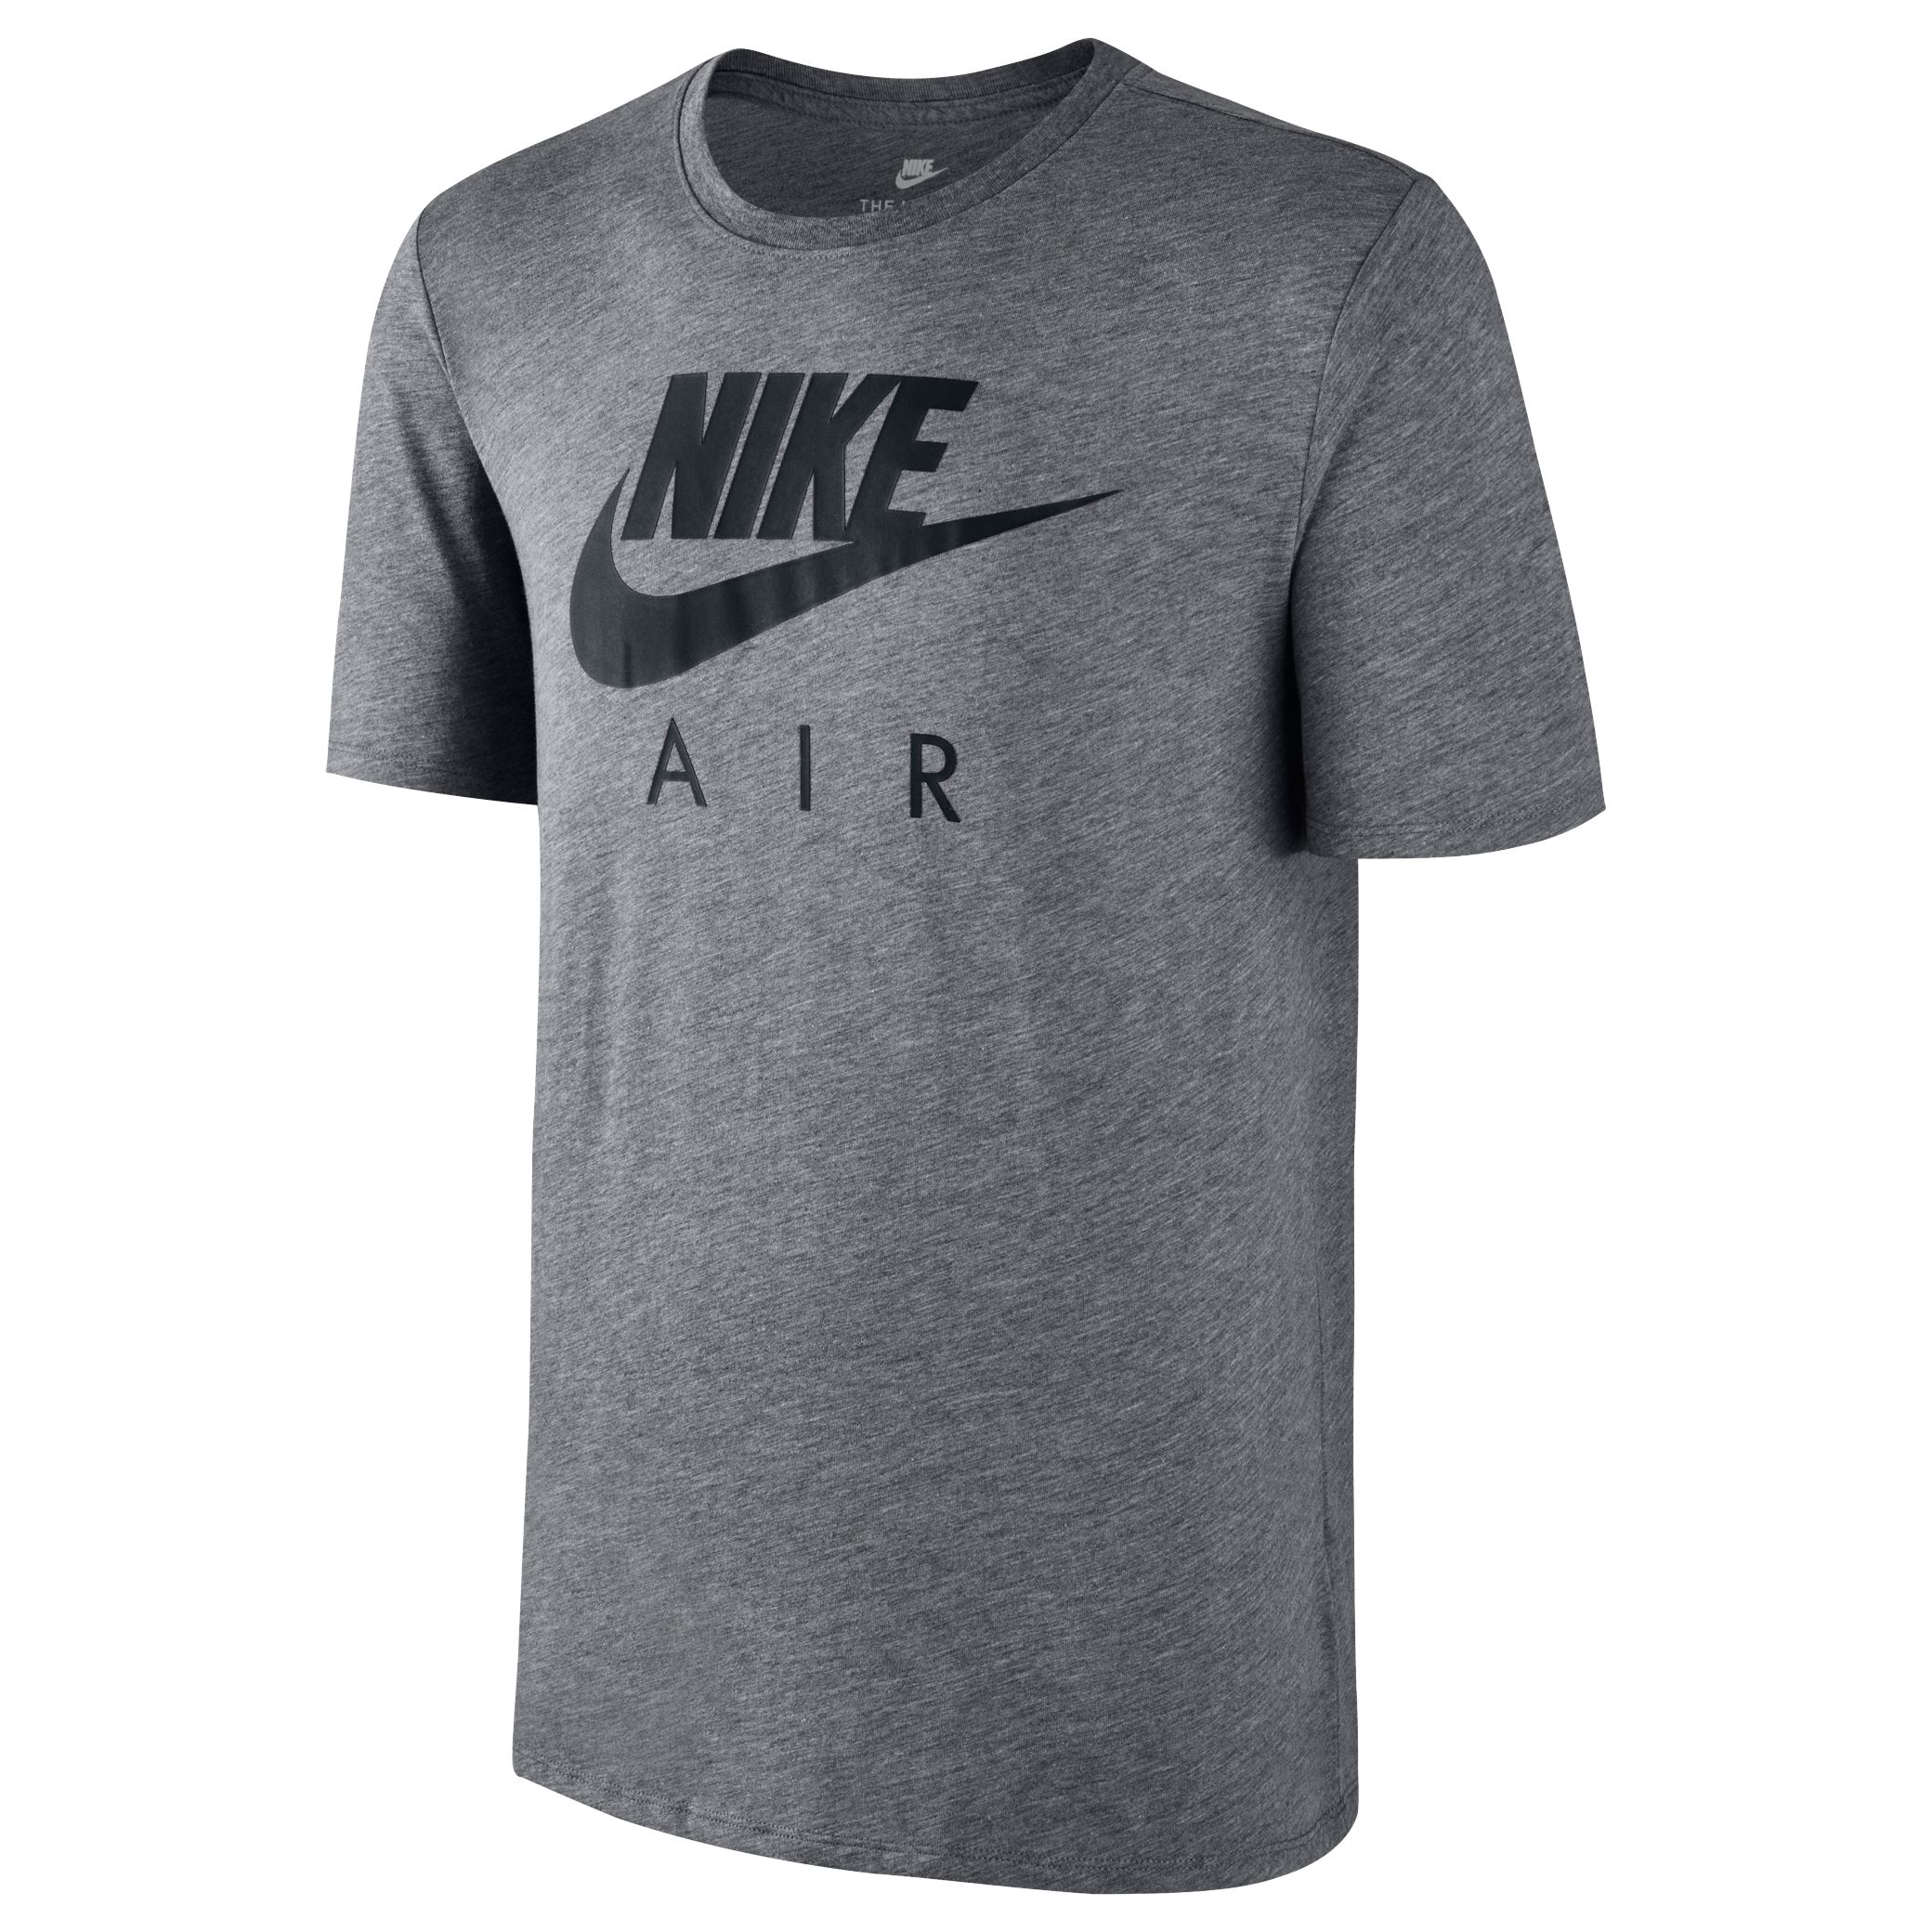 Nike Sportswear Air T-Shirt, Carbon Heather/Black, L